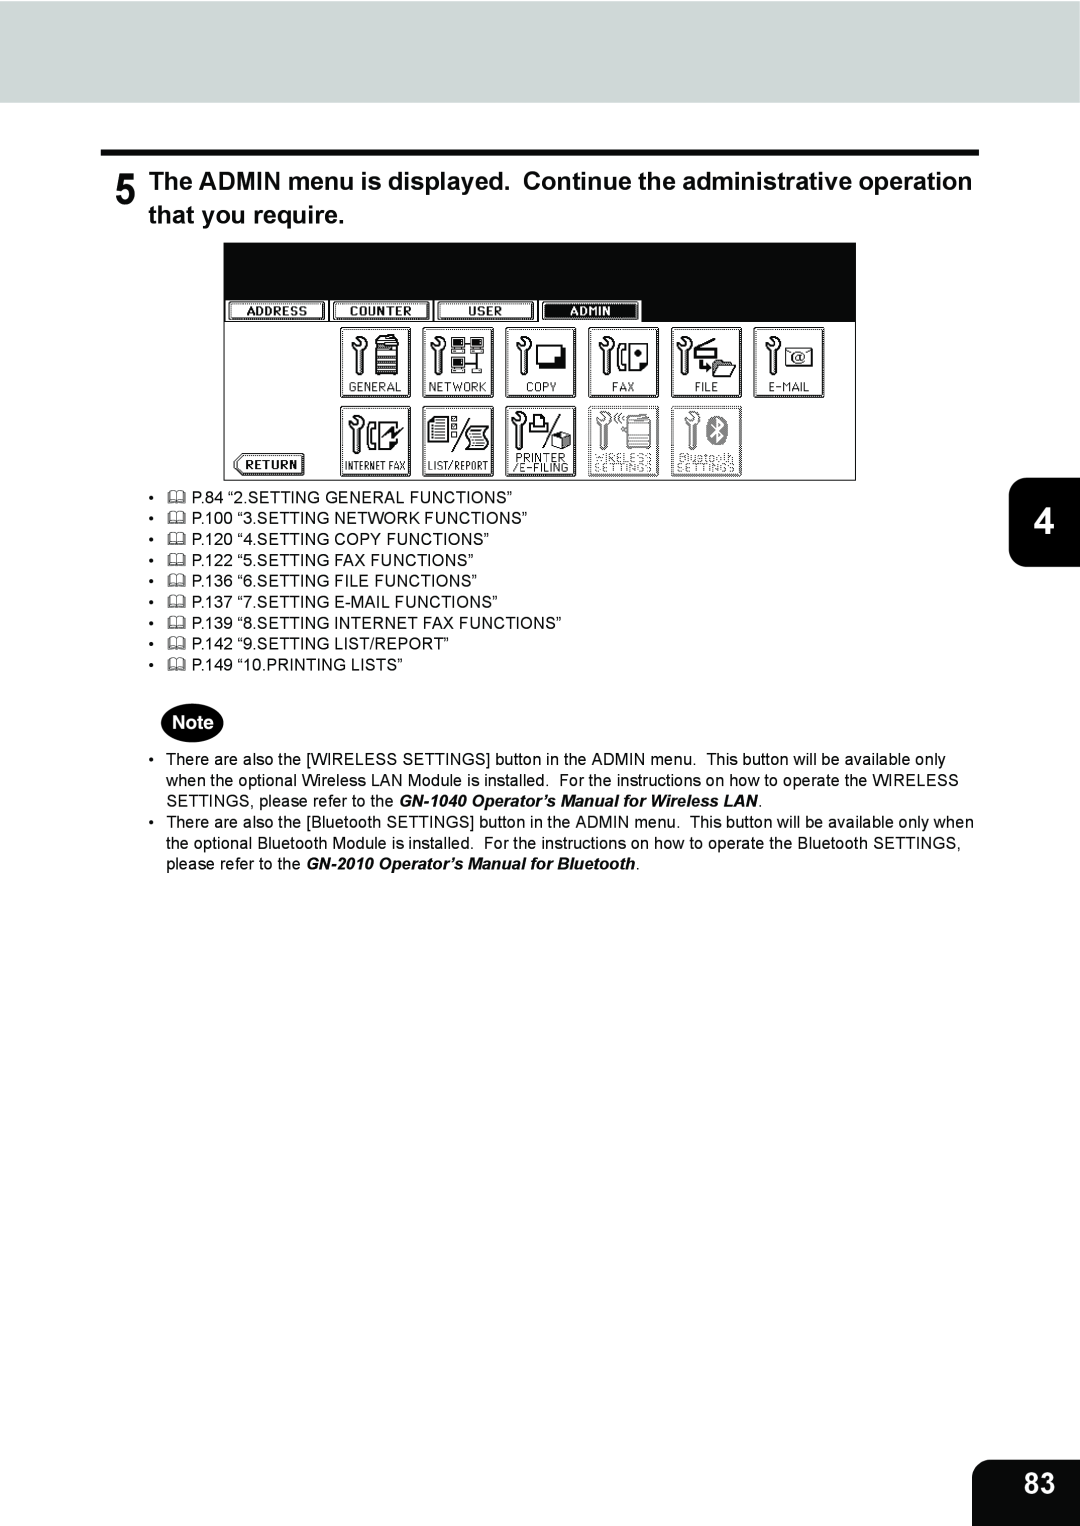 Toshiba 282, 232, 202L manual P.84 “2.SETTING GENERAL FUNCTIONS” 